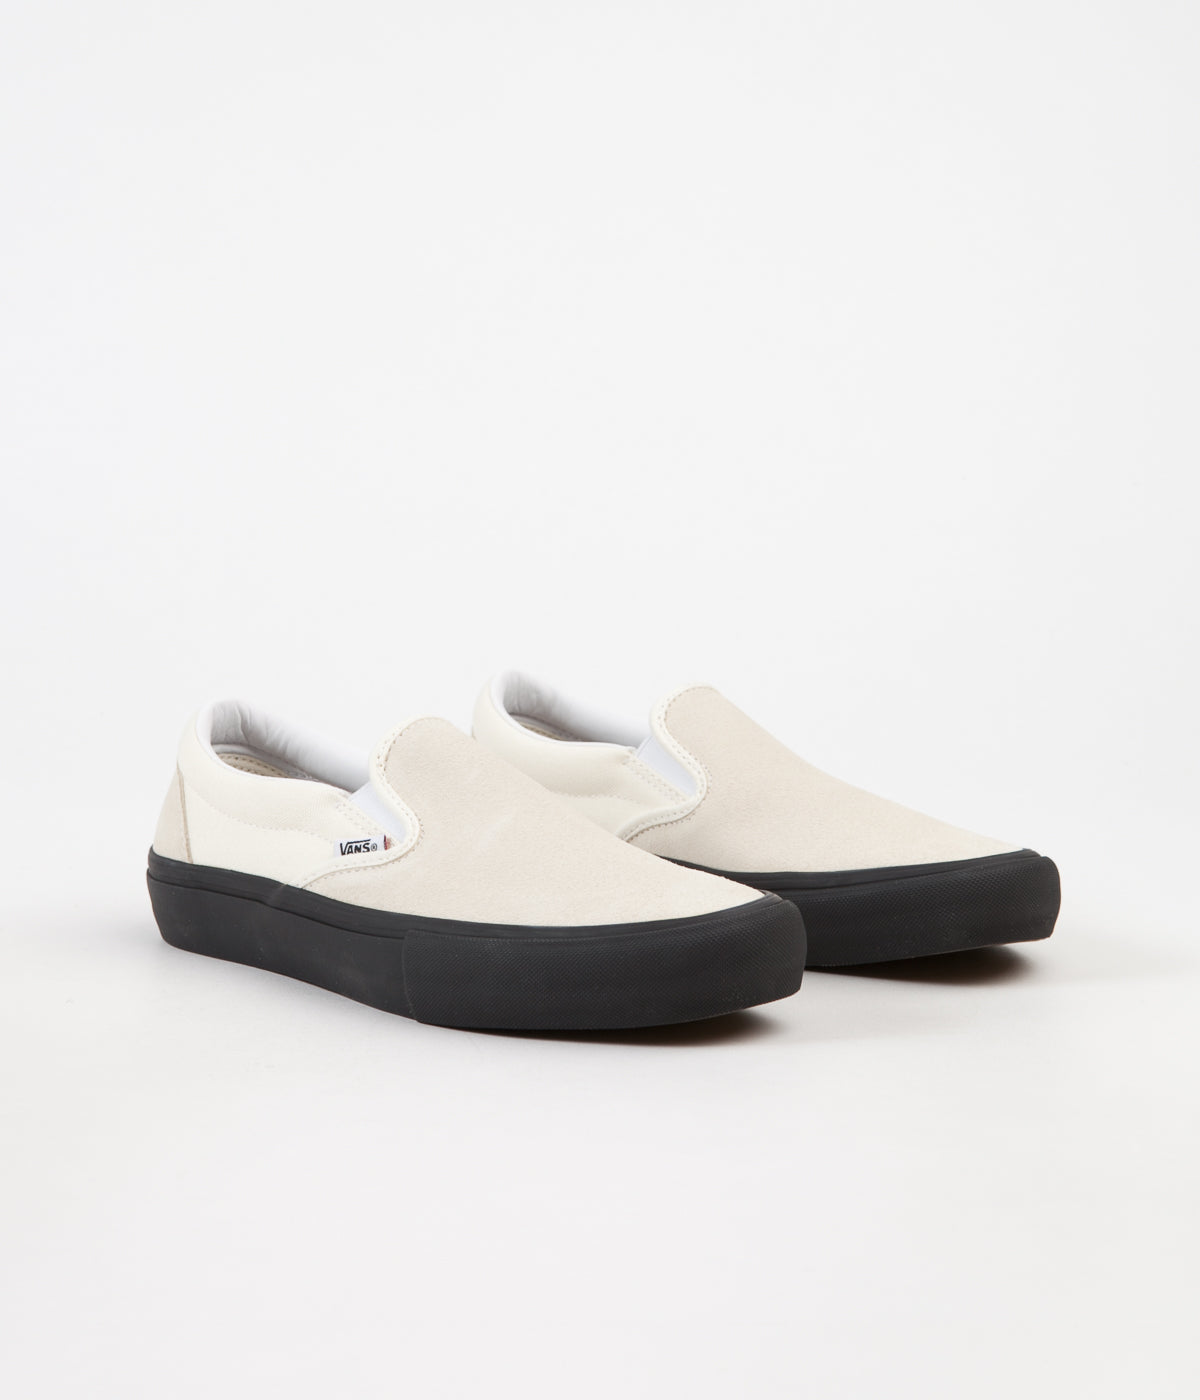 Vans Slip On Pro Shoes - Classic White 